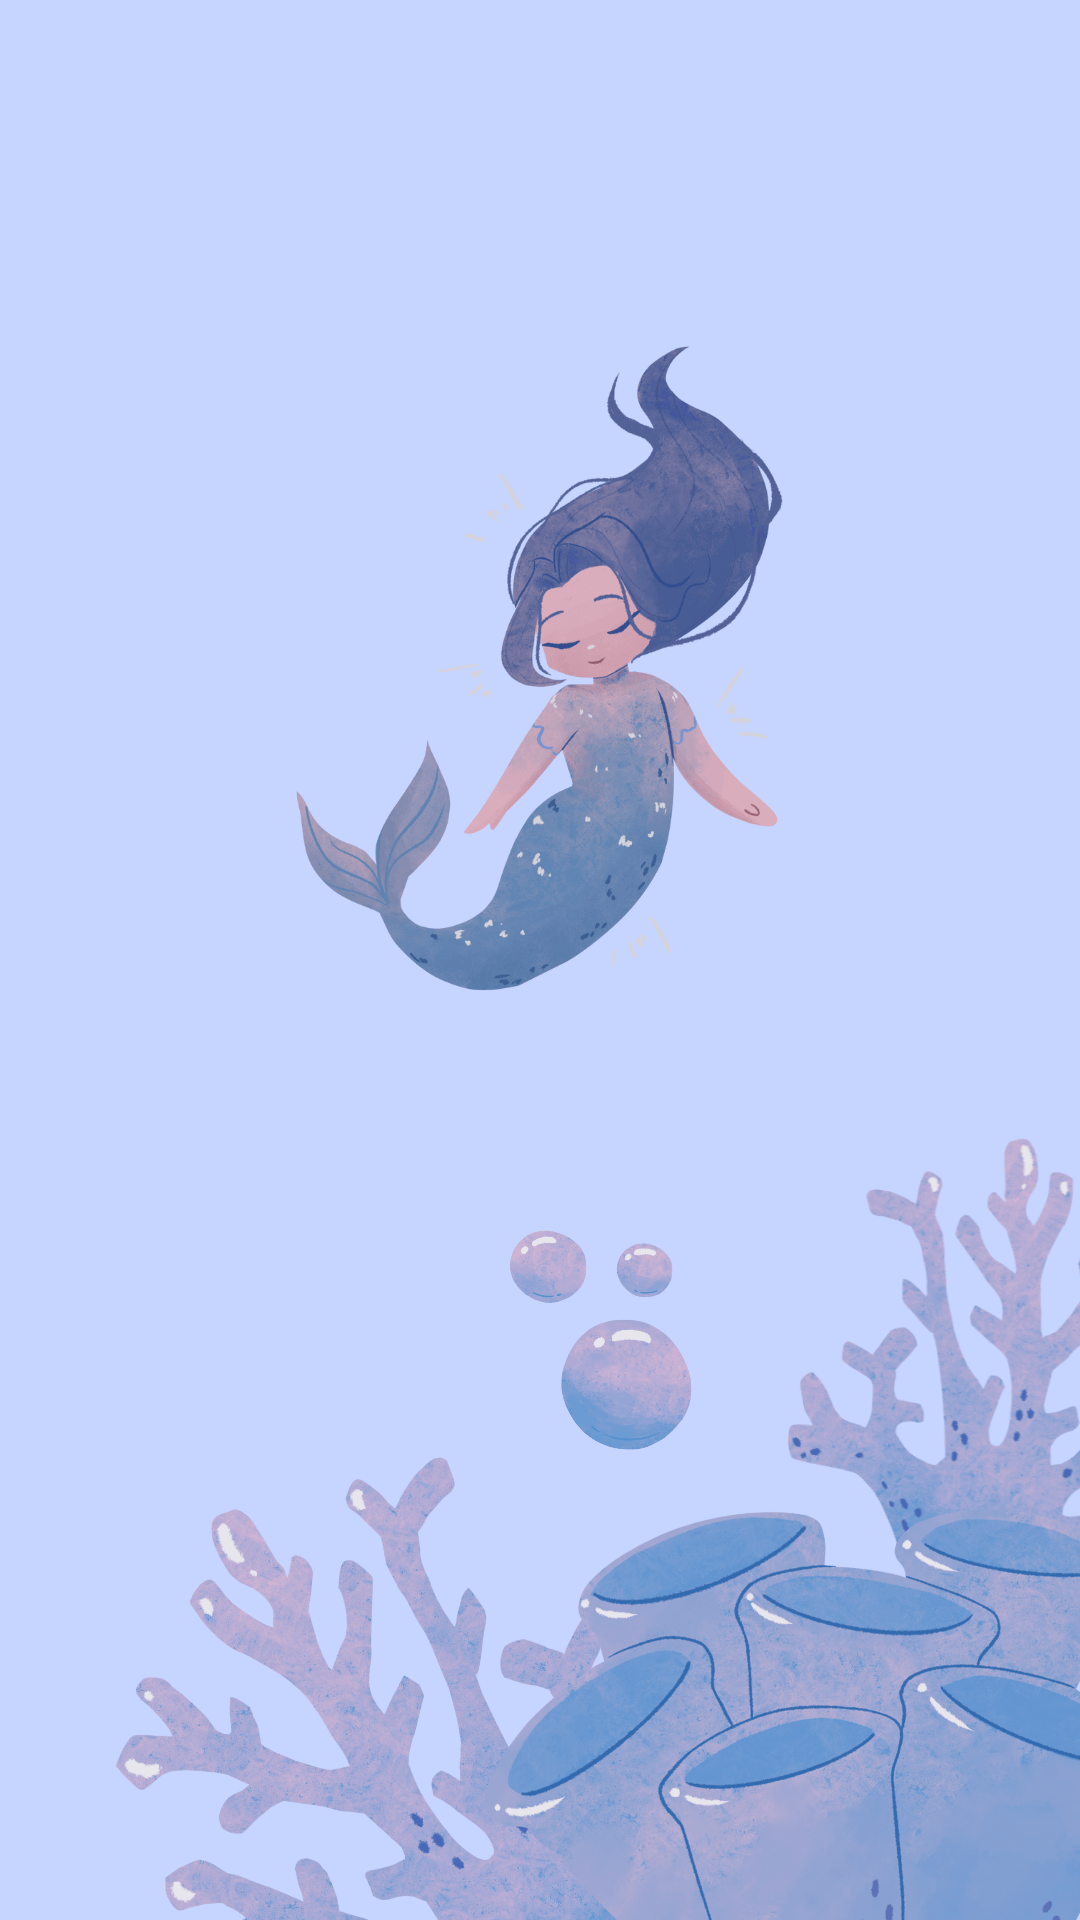 Aesthetic, simple mermaid underwater scene. Customizable mobile wallpaper [1080x1920]